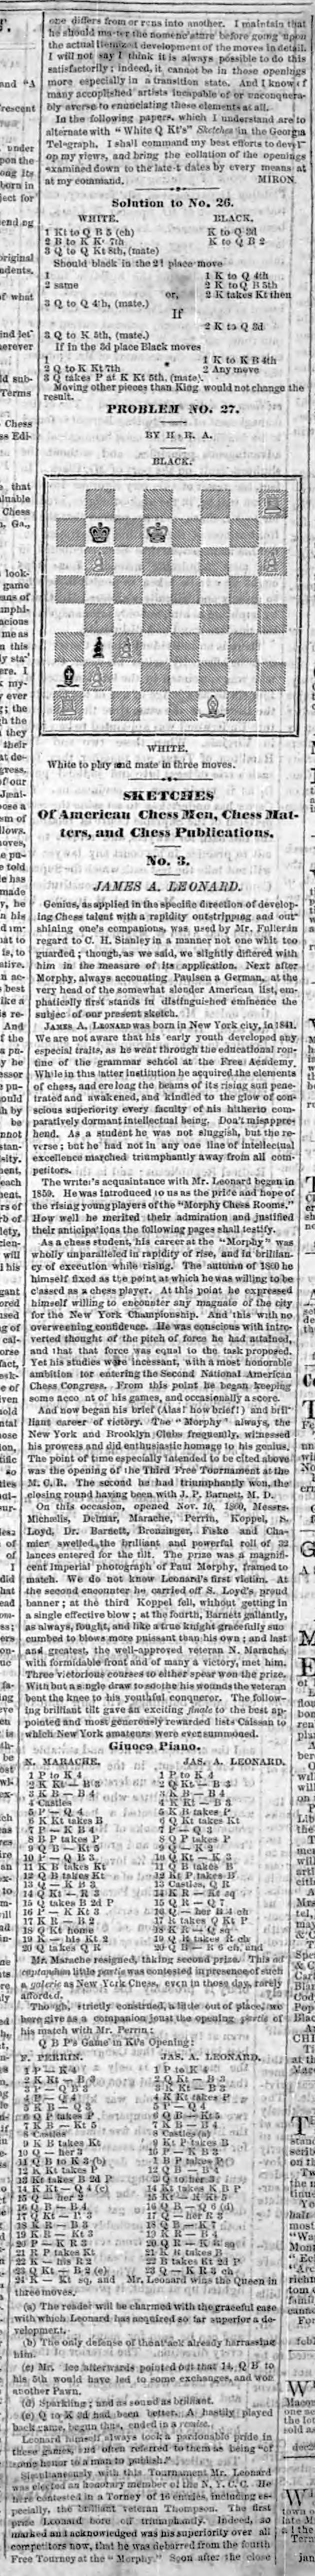 1867.02.15-02 Macon Georgia Weekly Telegraph.jpg